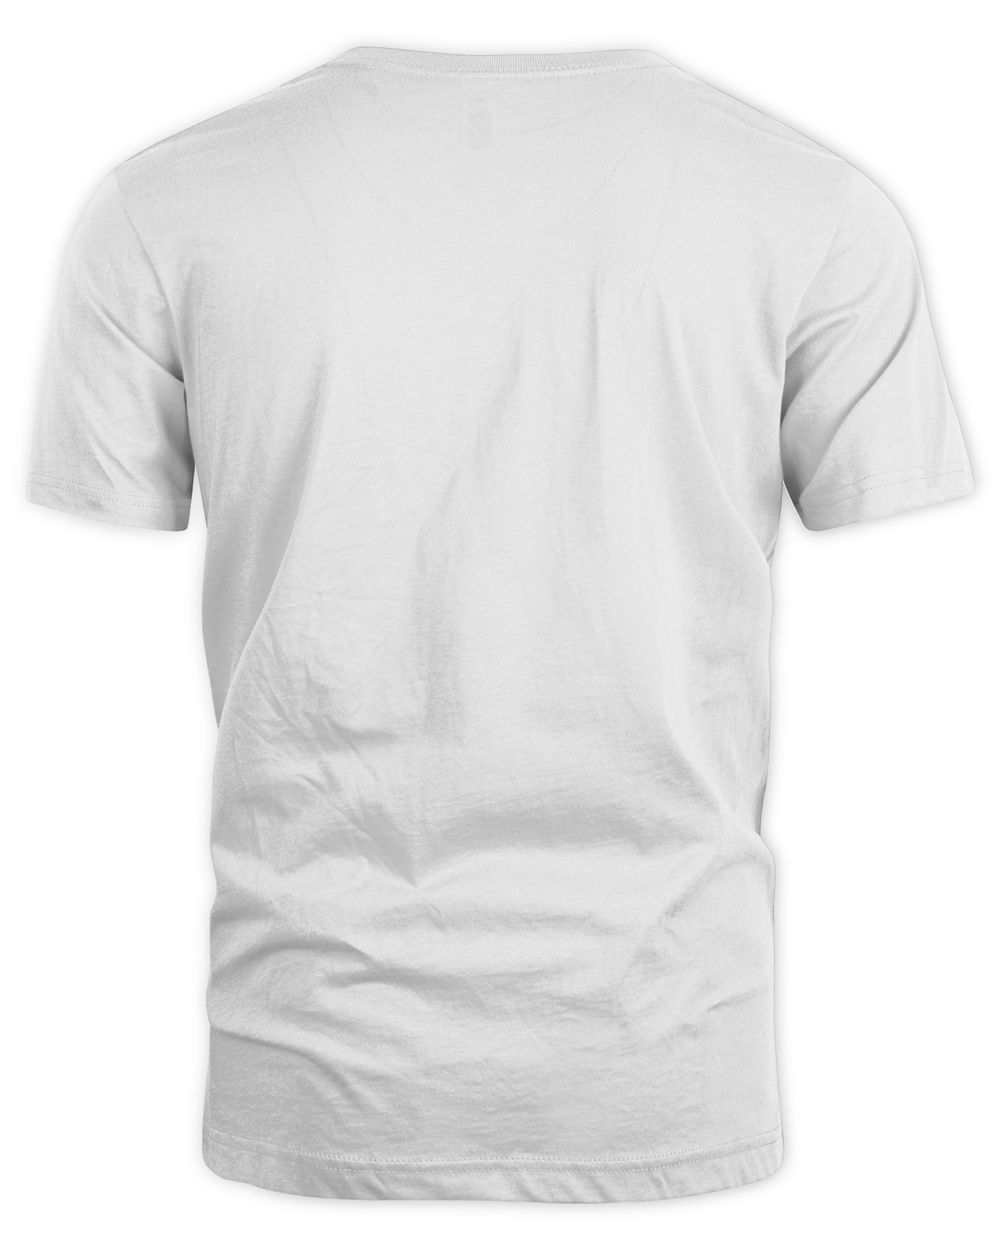 Buzzfeed Unsolved Merch Weird Helga Bad Day Shirt Unisex Standard T-Shirt white 